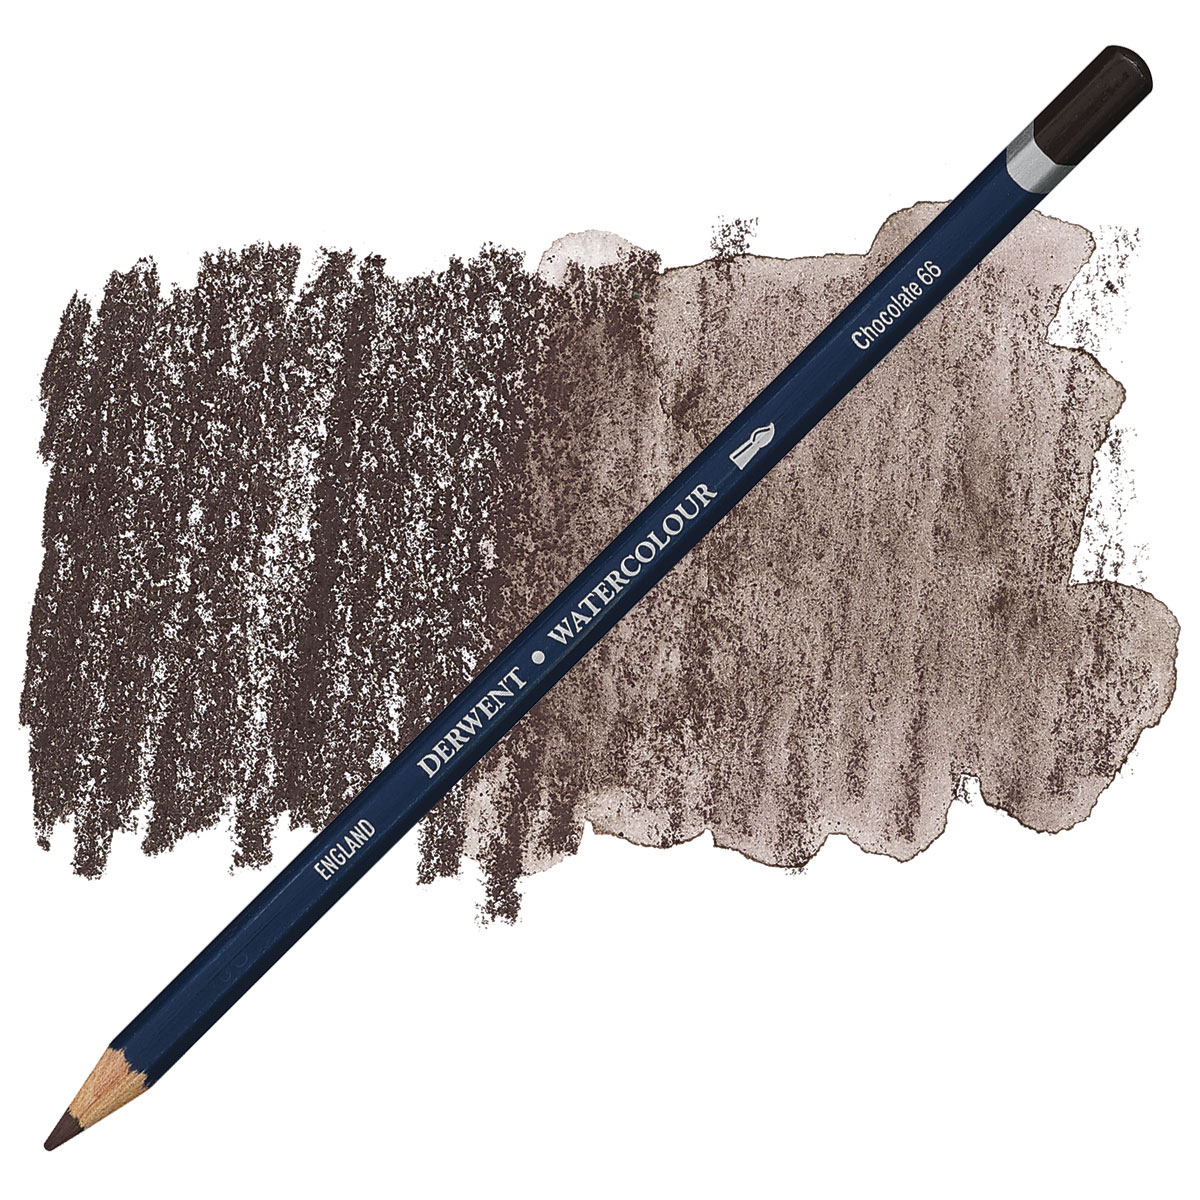 Derwent Watercolor Pencil - Chocolate, Brown